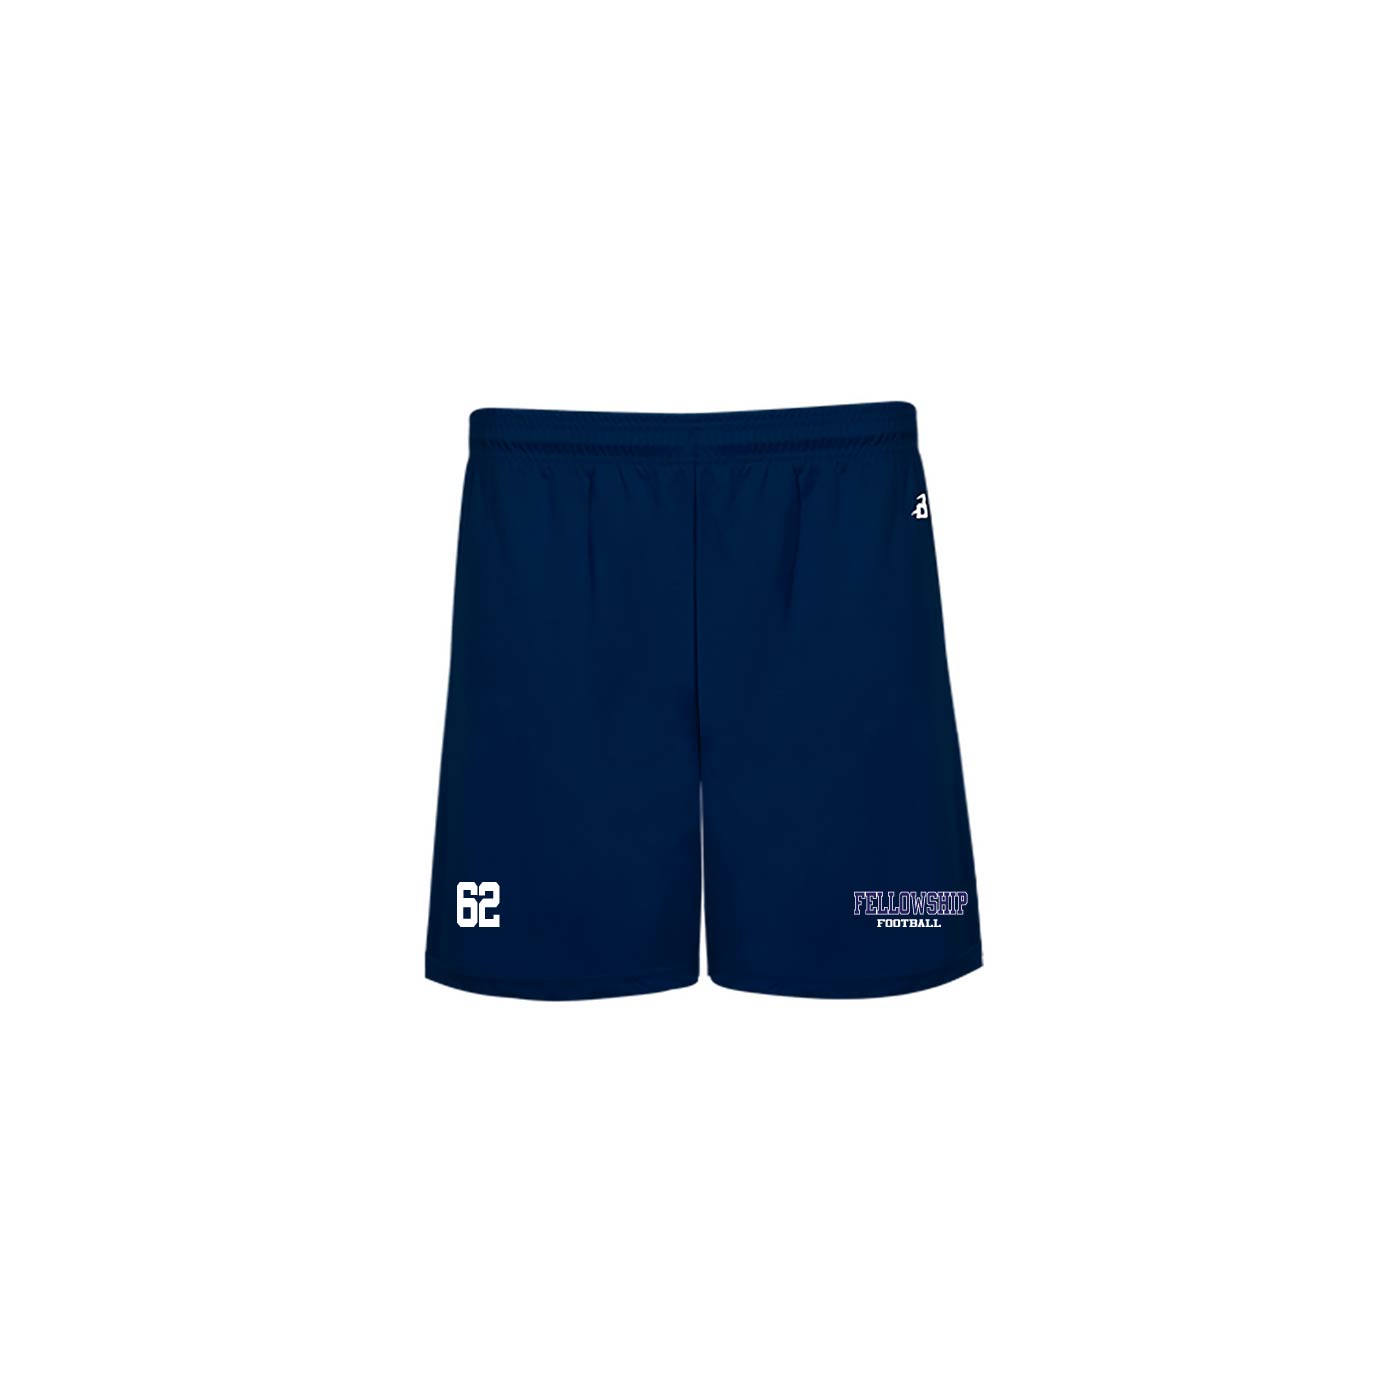 Fellowship Football Shorts - Pocketed 5" Inseam (Navy or Grey)